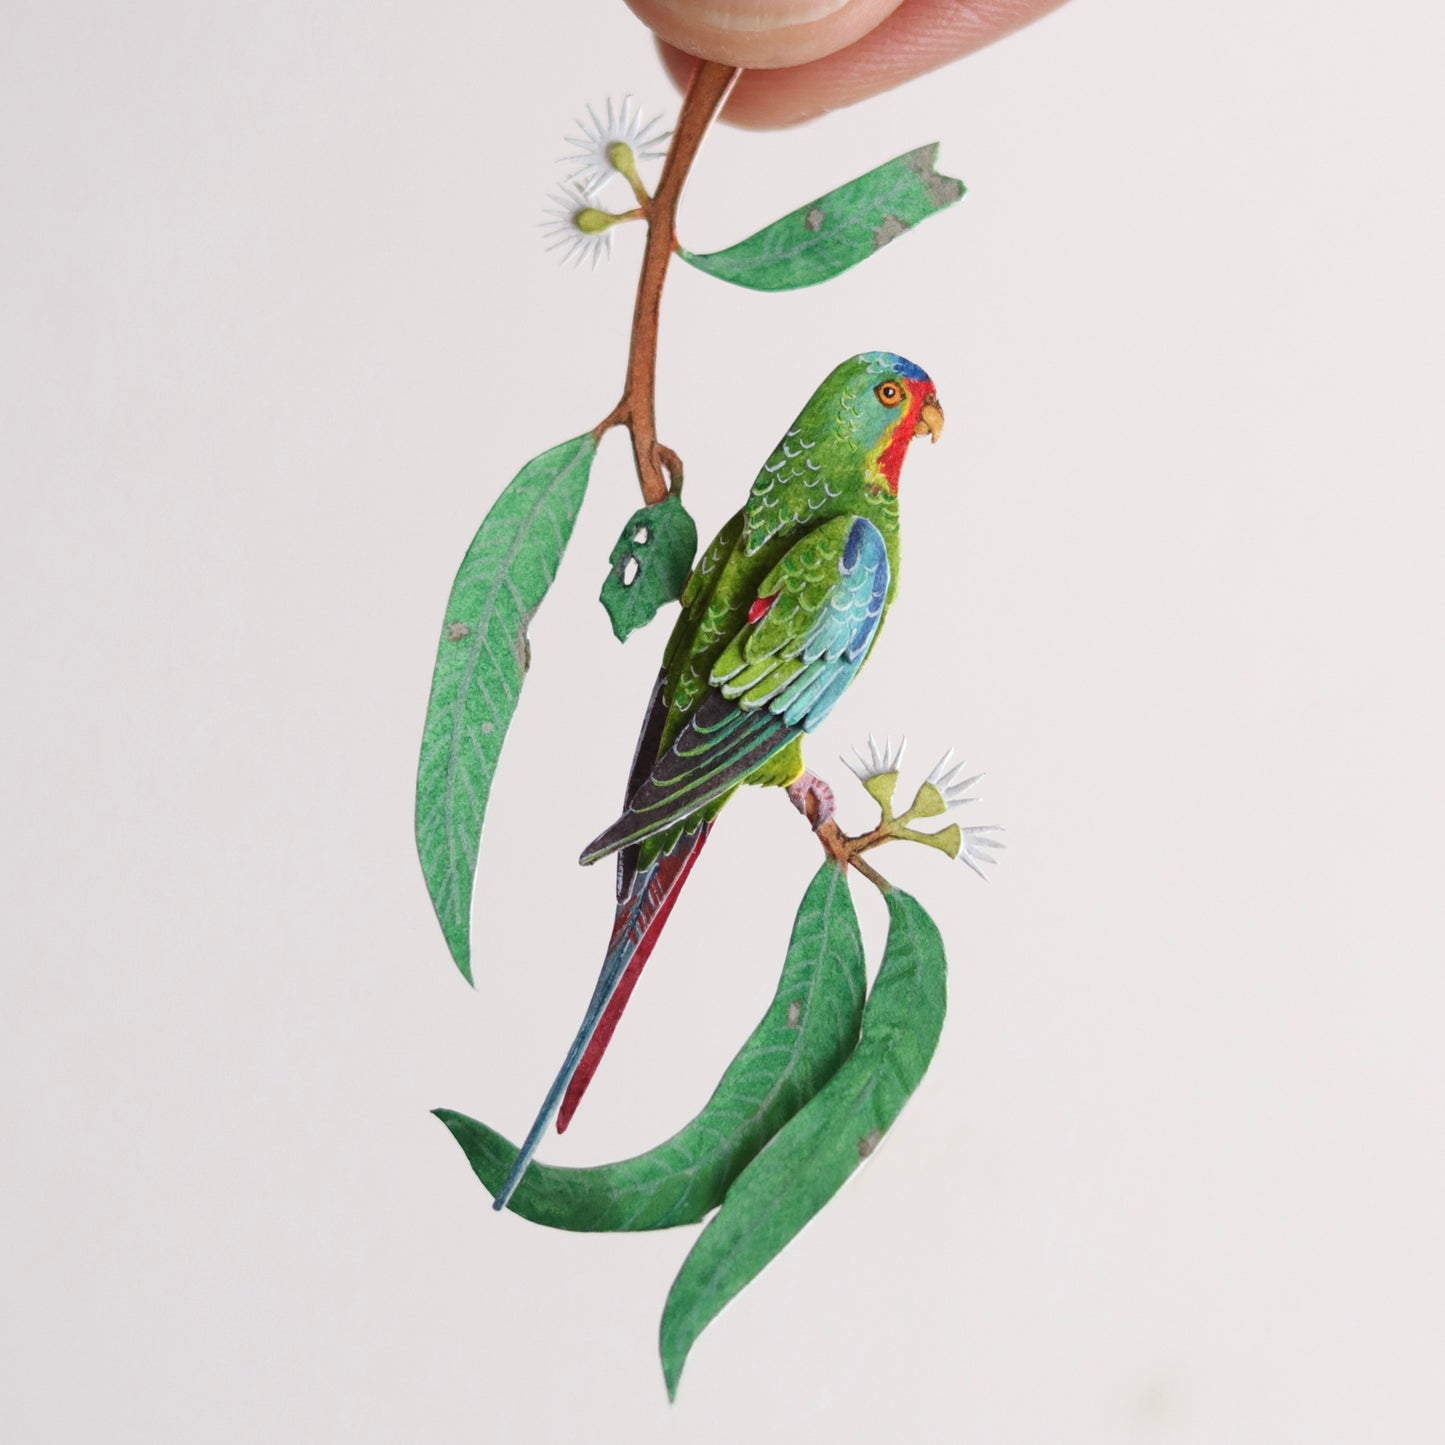 Swift Parrot